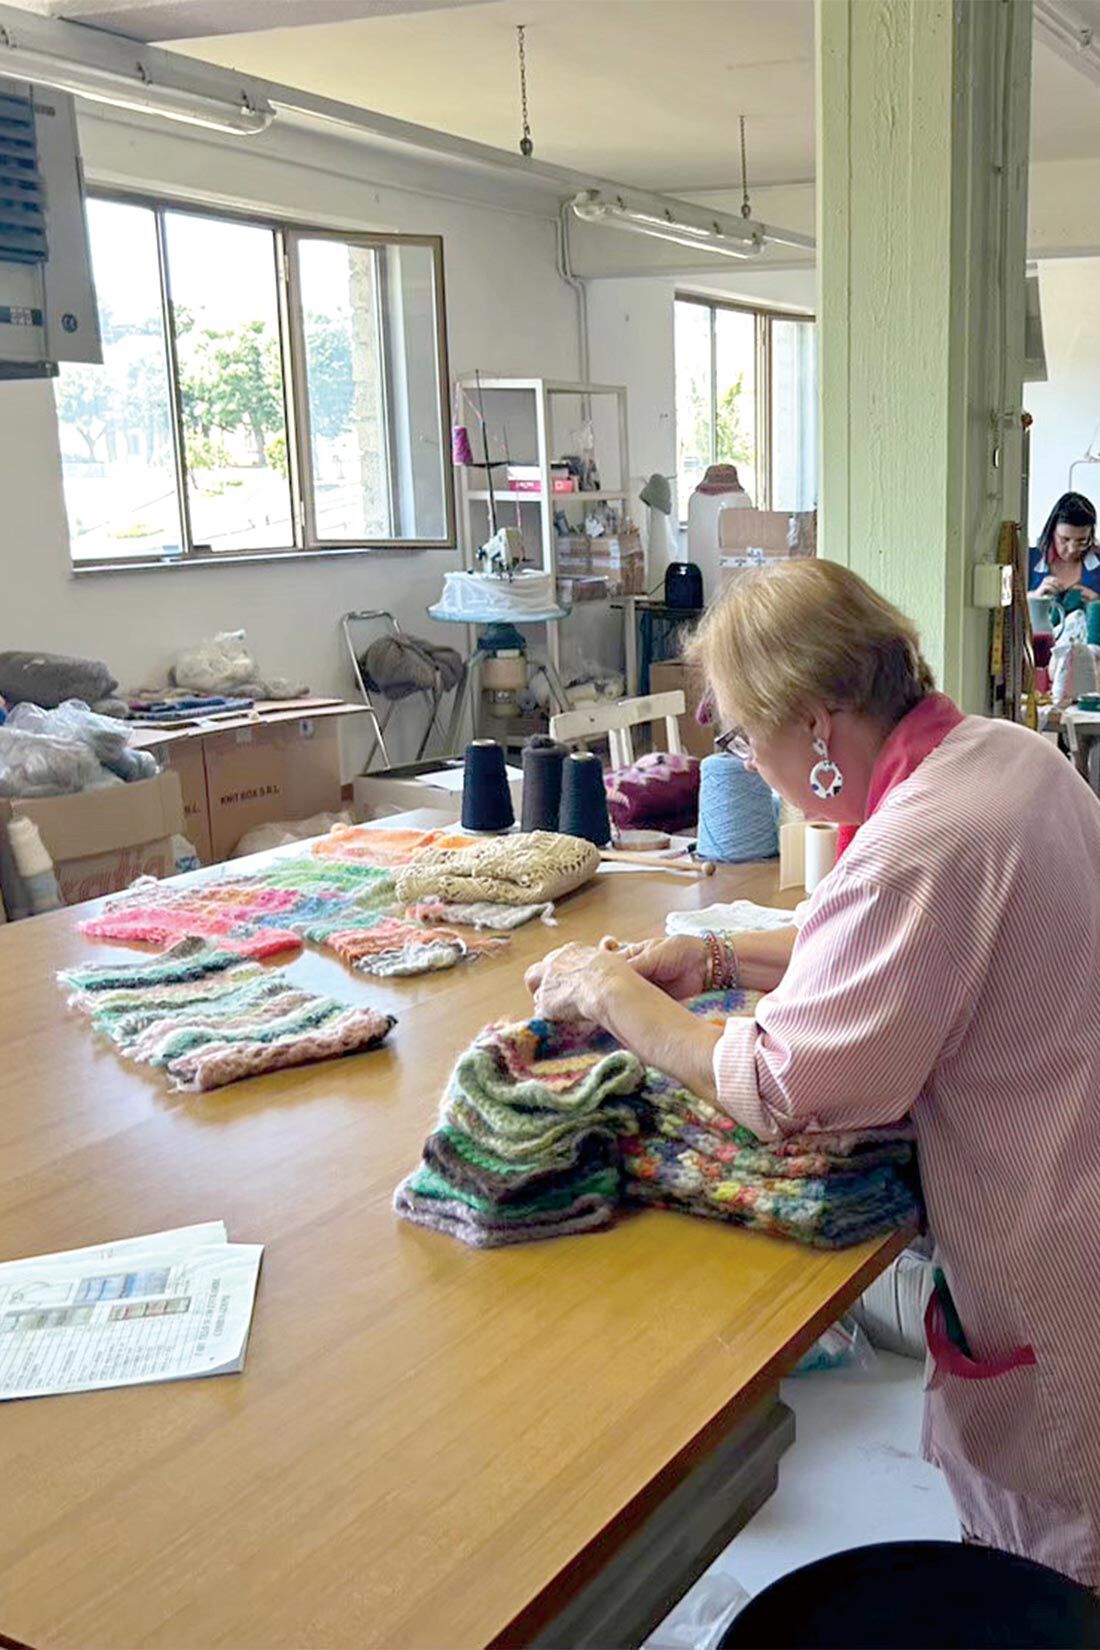 MEDE19F|MEDE19F　イタリアのおばあちゃんが編んでる工房で編みたてたウールのニットカーディガン〈グレージュ〉|村の編み物を取り仕切る工房「チェッコーニ」。高齢の女性が中心だが、若い世代にも編み物の技は伝承されています。